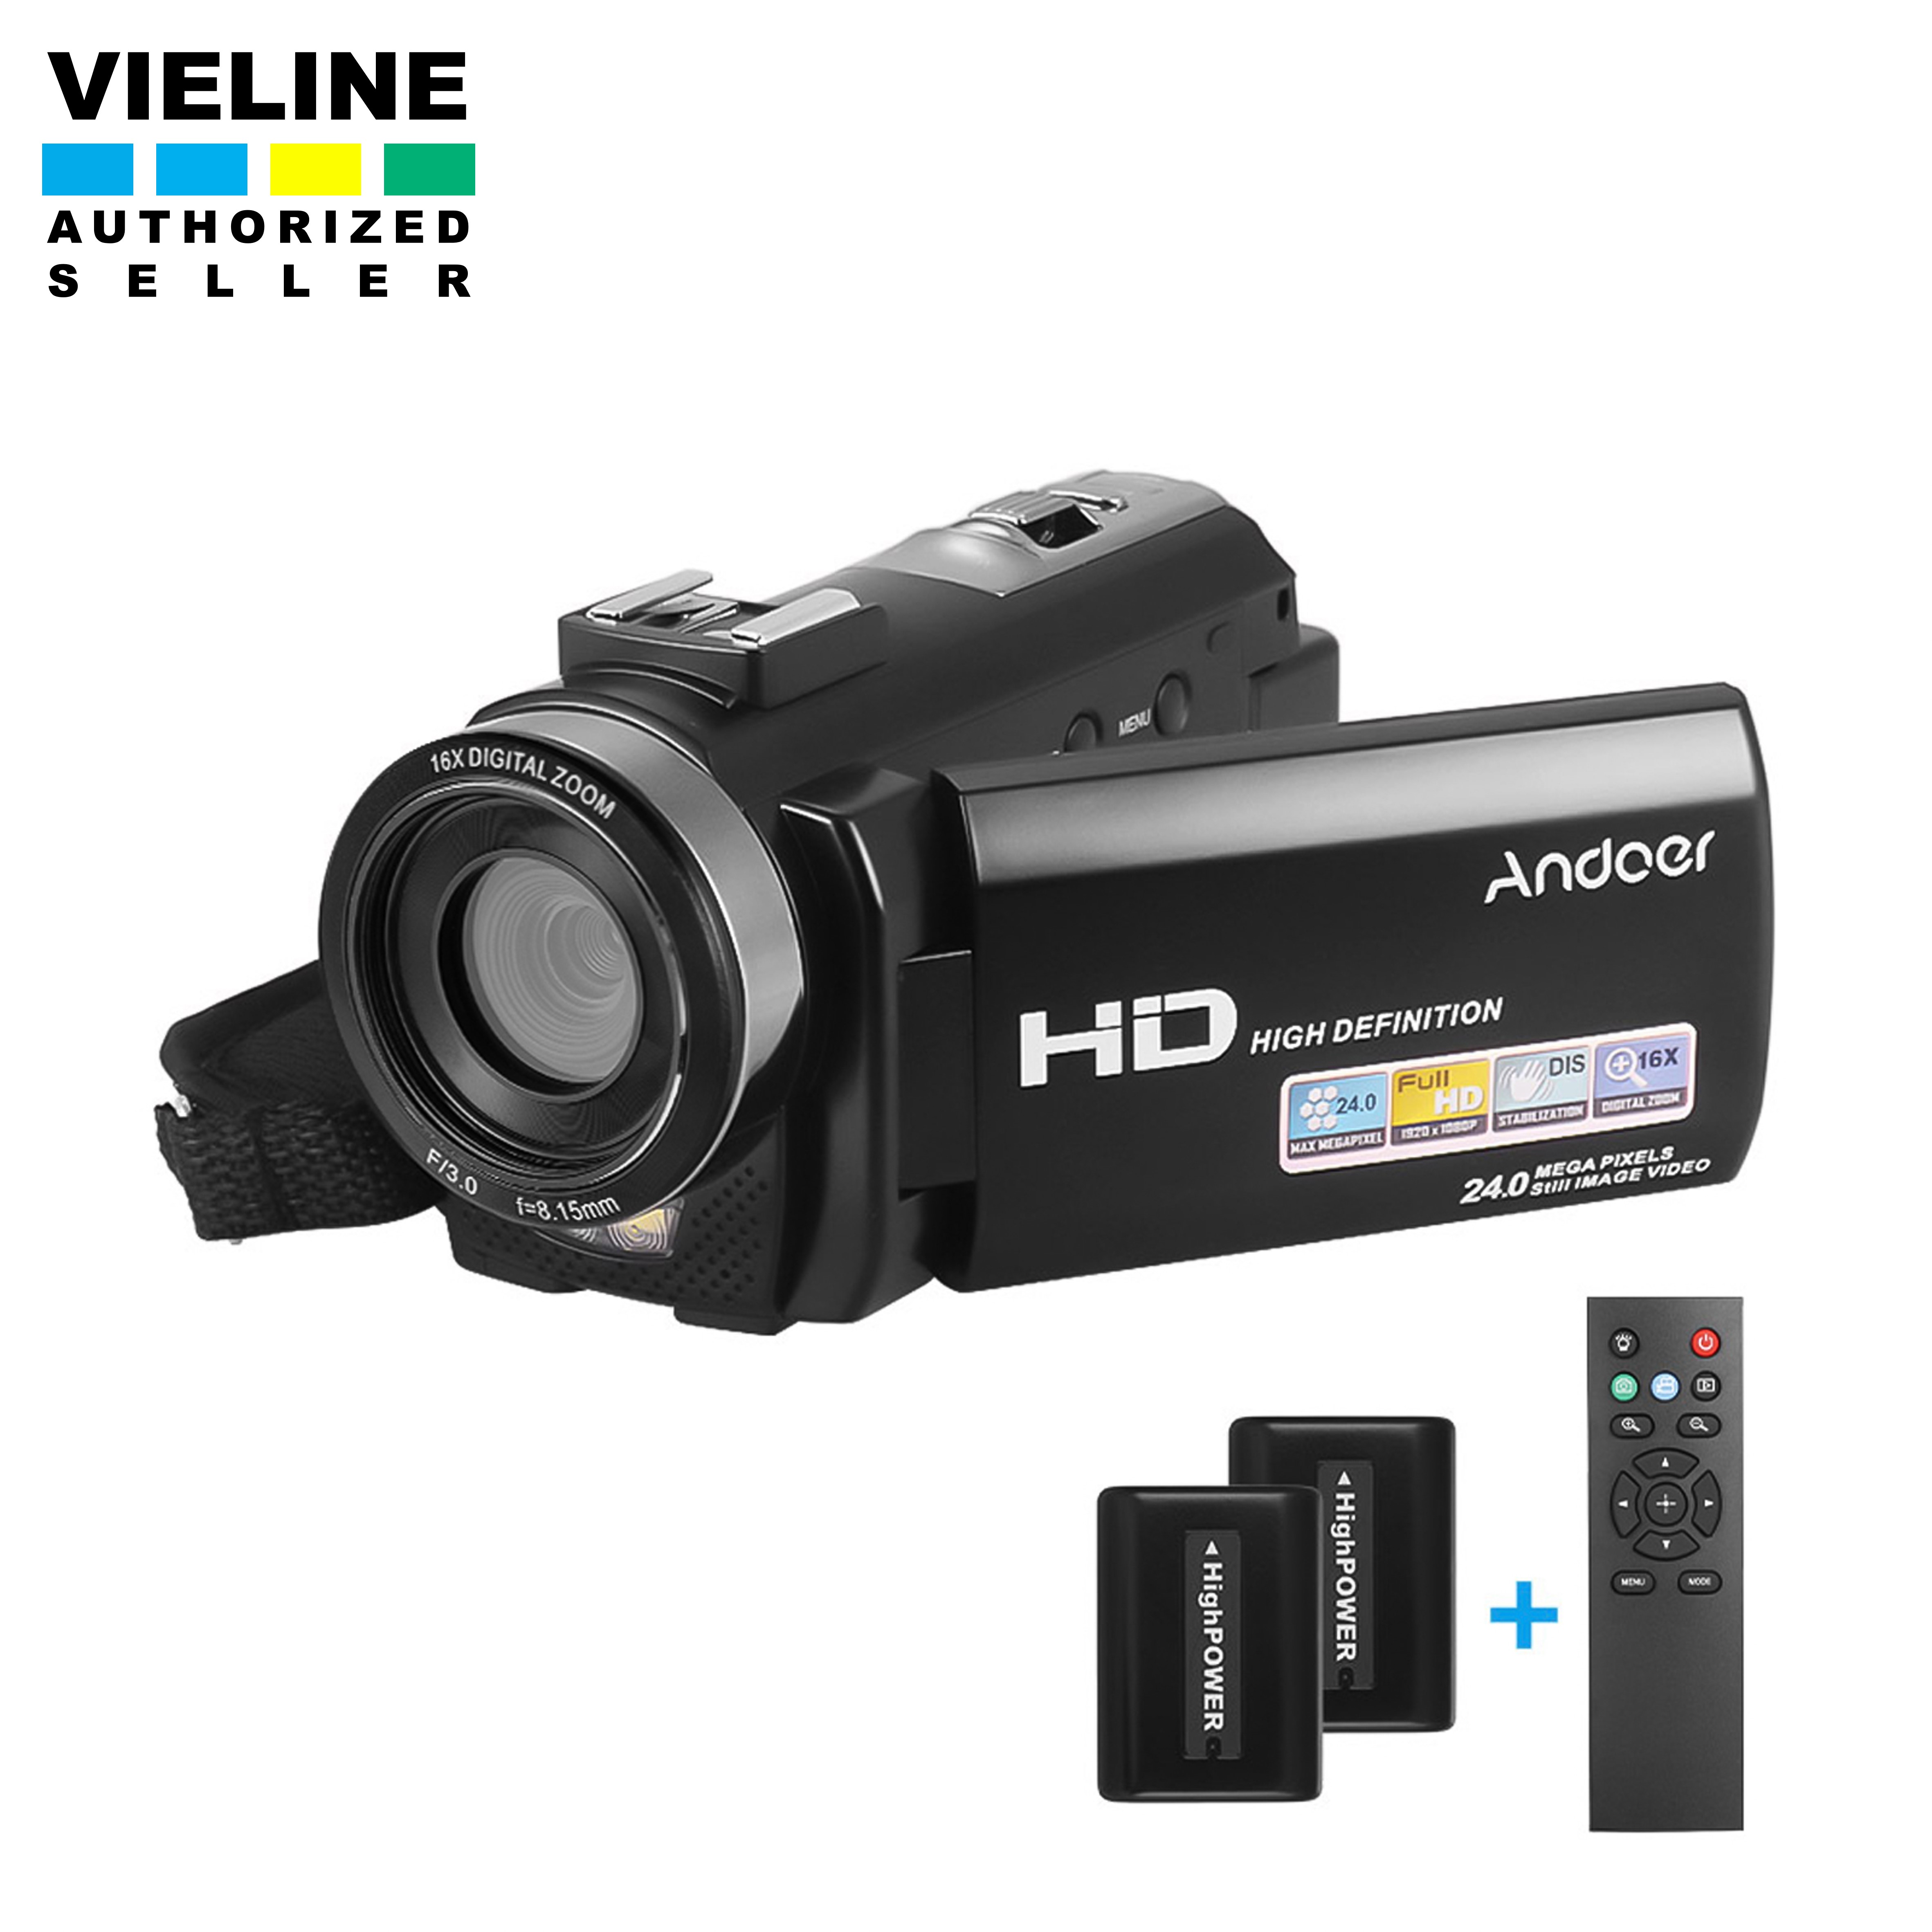 Andoer HDV-201LM 1080 จุด FHD กล้องวิดีโอดิจิตอลกล้องบันทึก DV 24mp 16X ซูมดิจิตอล 3.0 นิ้วหน้าจอแอลซีดีที่มี 2 ชิ้นแบตเตอรี่แบบชาร์จไฟ + พิเศษ 0.39x เลนส์มุมกว้าง + ไมโครโฟน